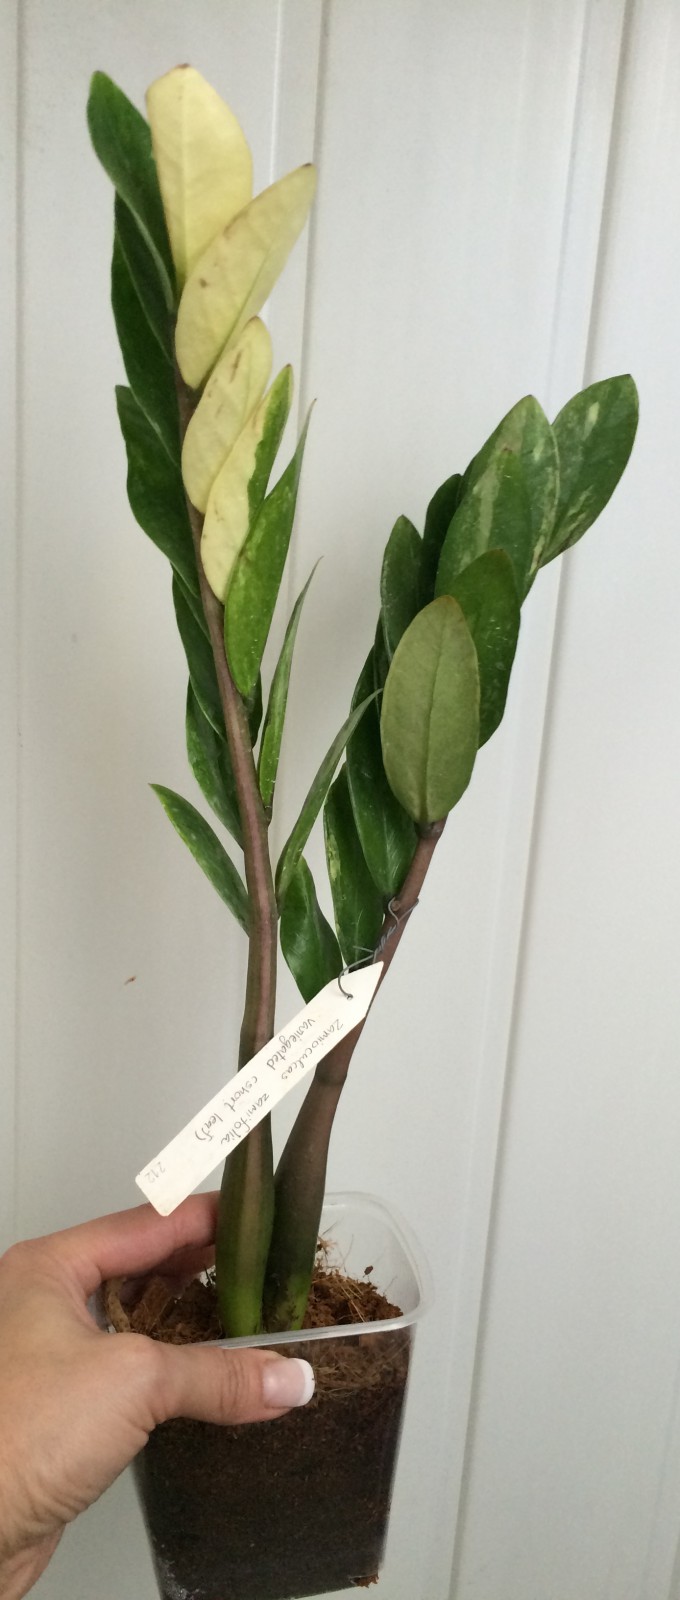 Zamioculcas zamifolia variegated (short leaf) / Замиокулькас замиелистный вариегатный, коротколистная форма 80-150